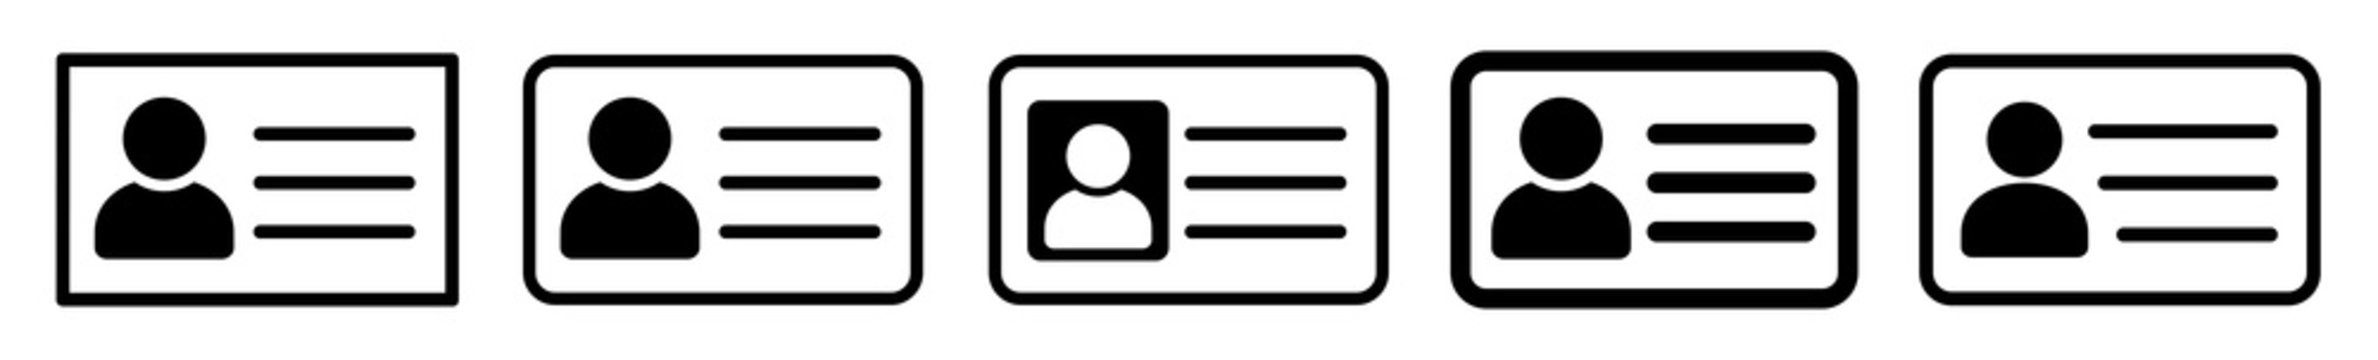 ID Card Icon Black | Driver's License Illustration | ID Badge Symbol | Identity Logo | Pass Passport Sign | Isolated | Variations